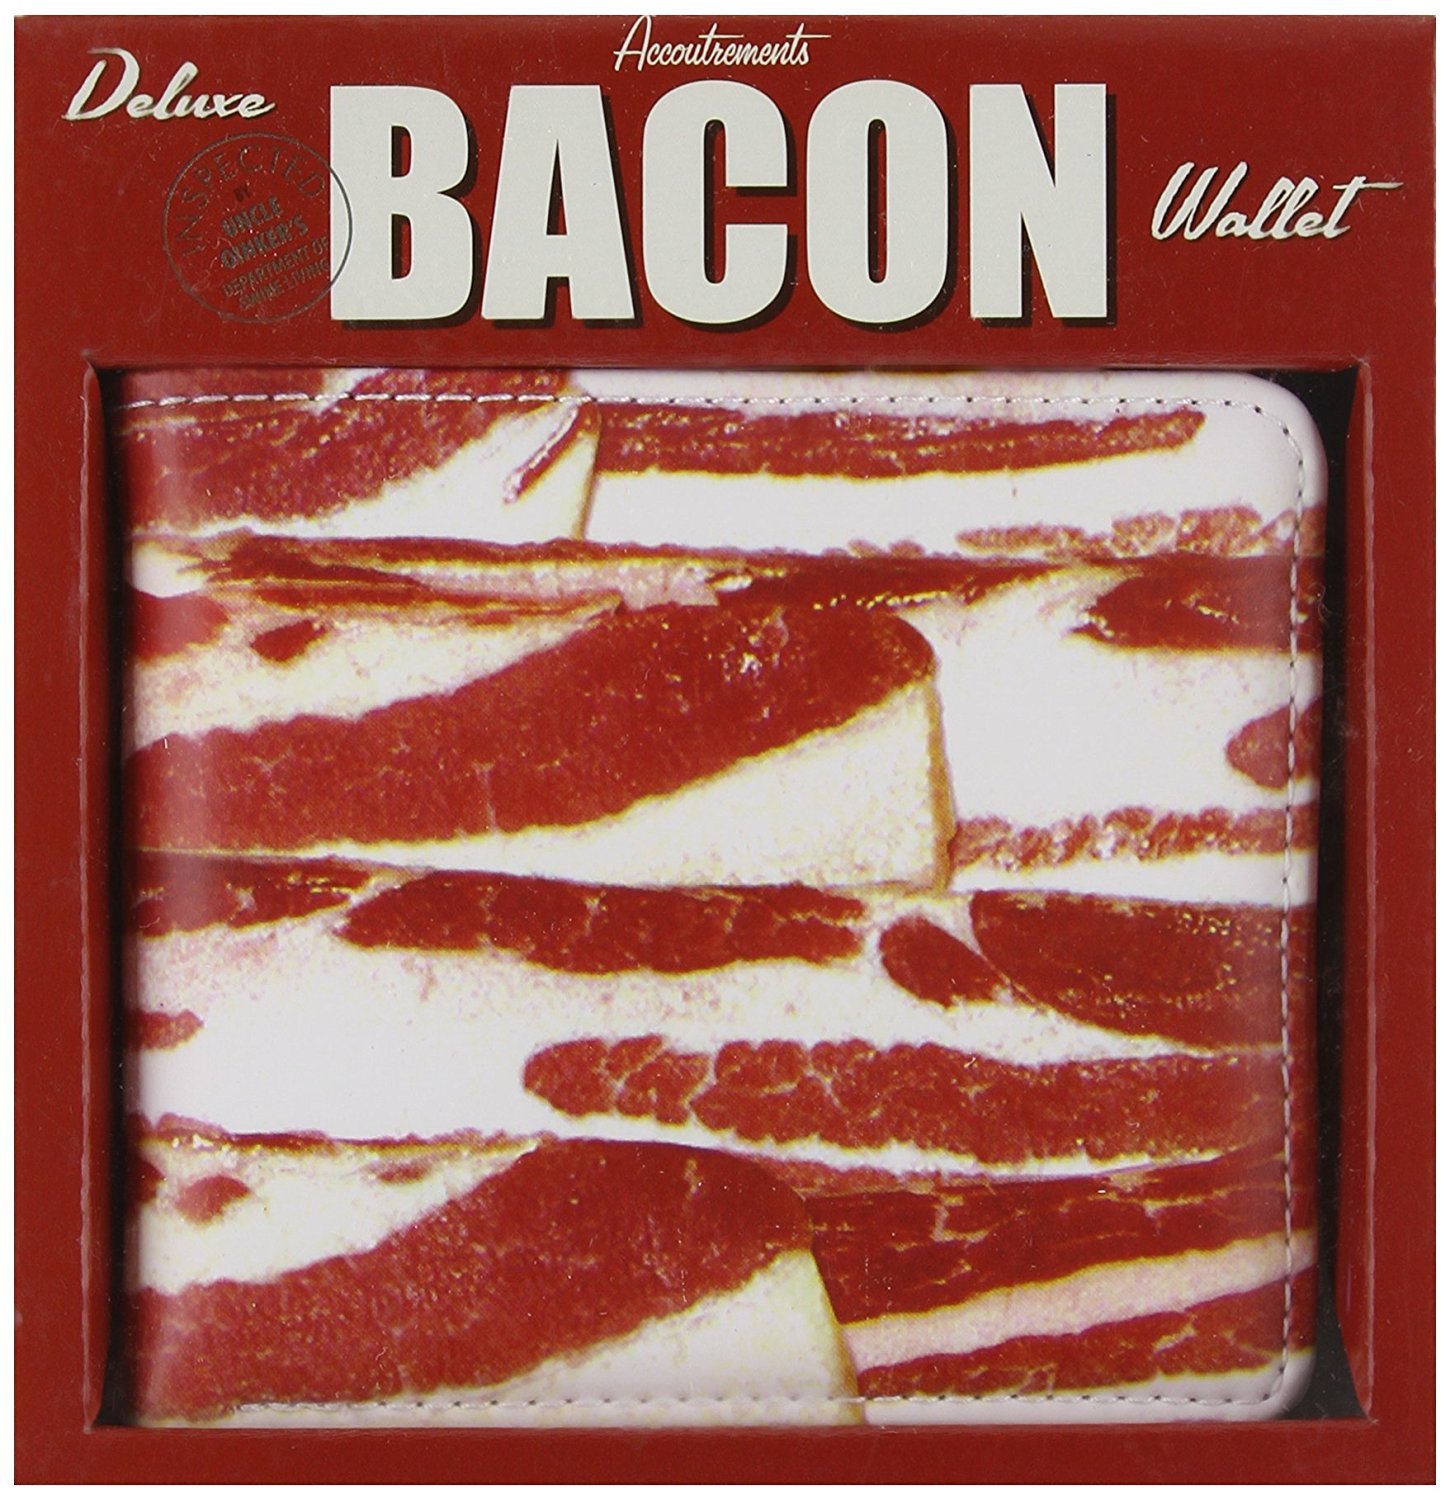 Deluxe Bacon Wallet